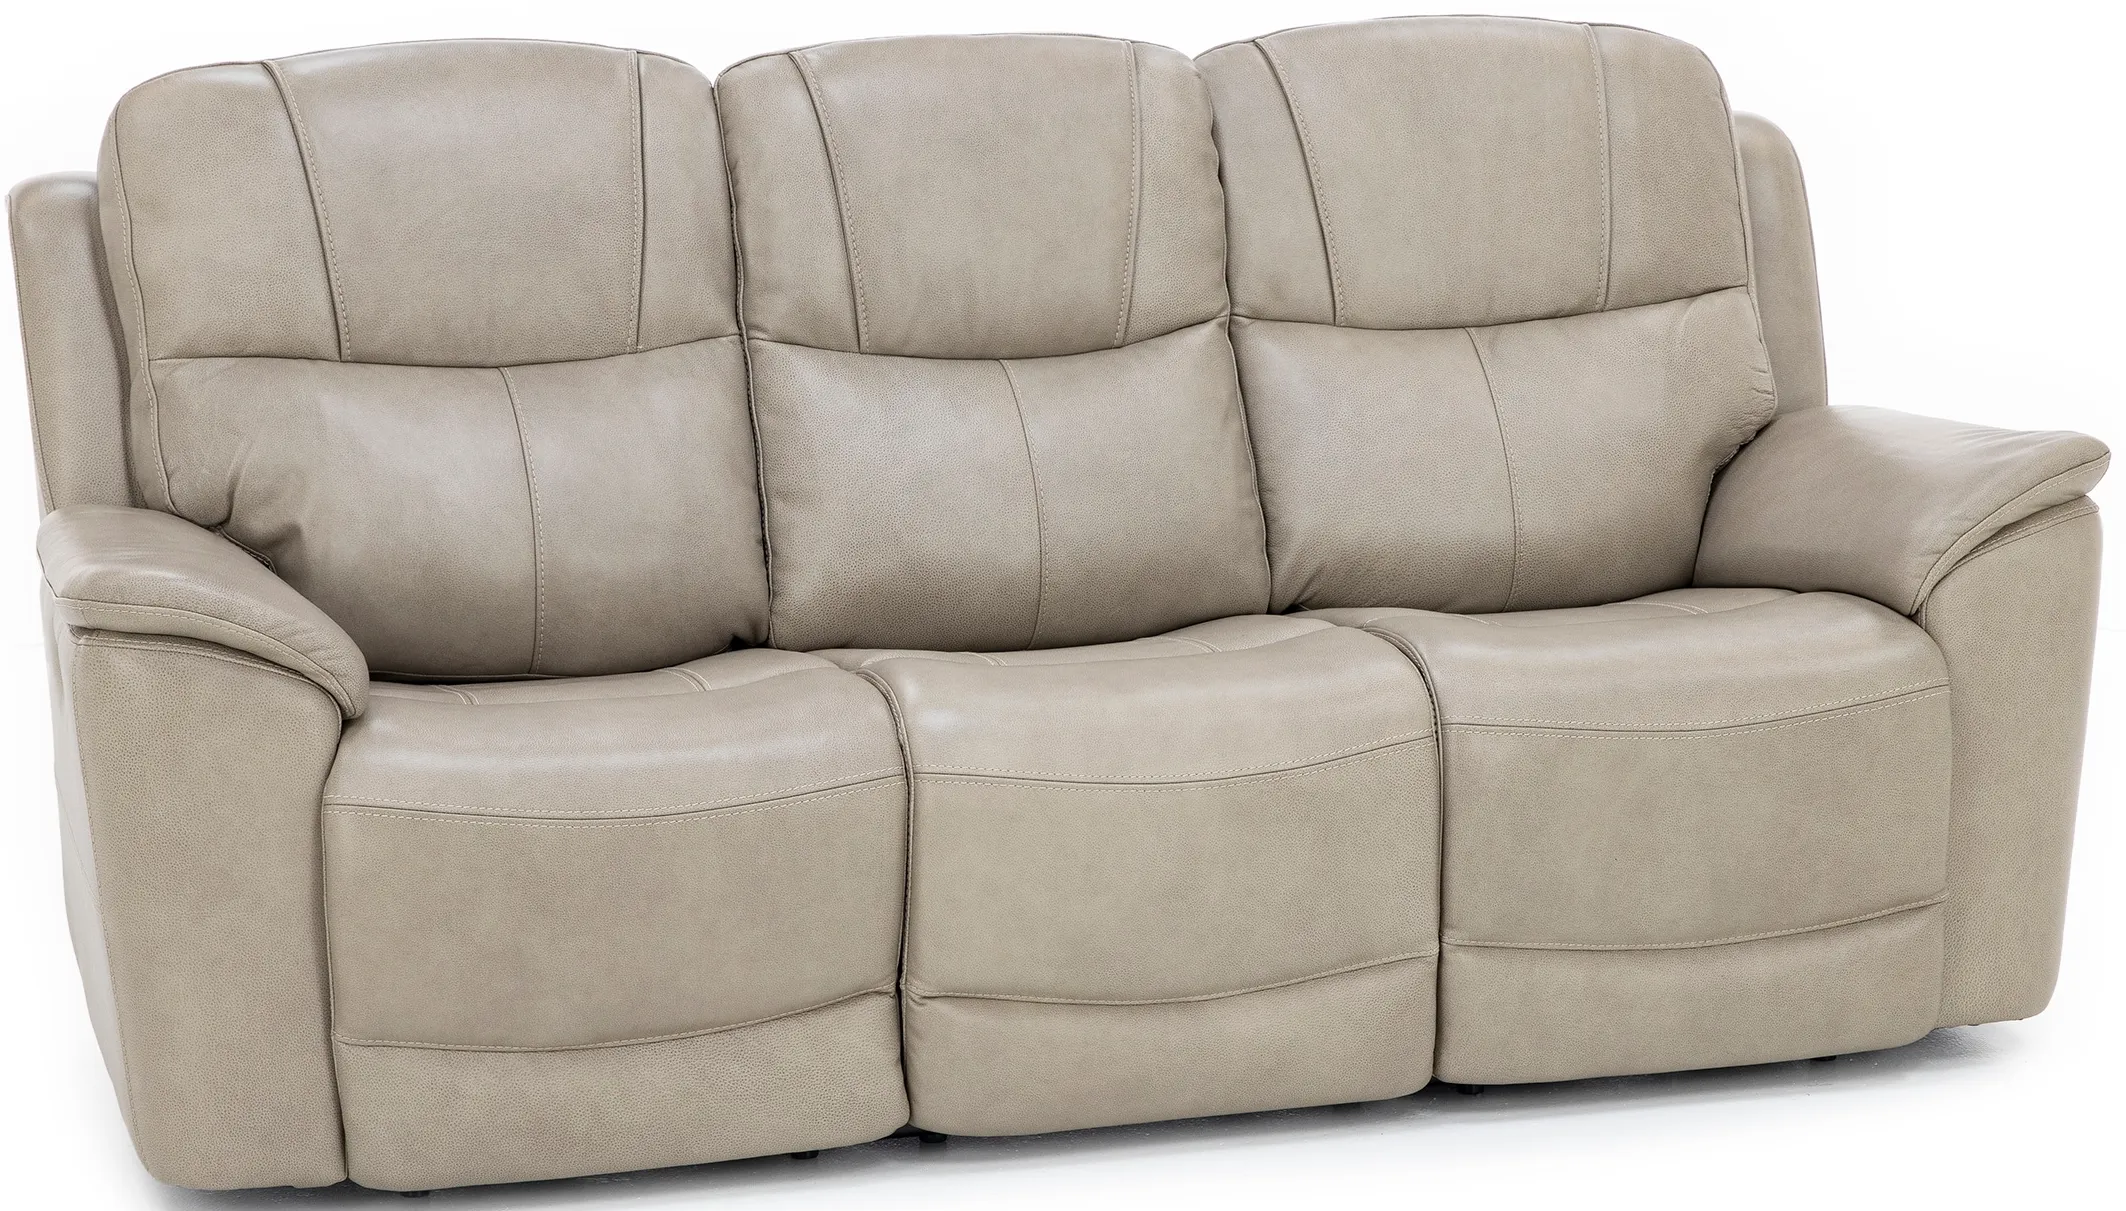 Wrenn Leather Fully Loaded Zero Gravity Reclining Sofa in Pebble